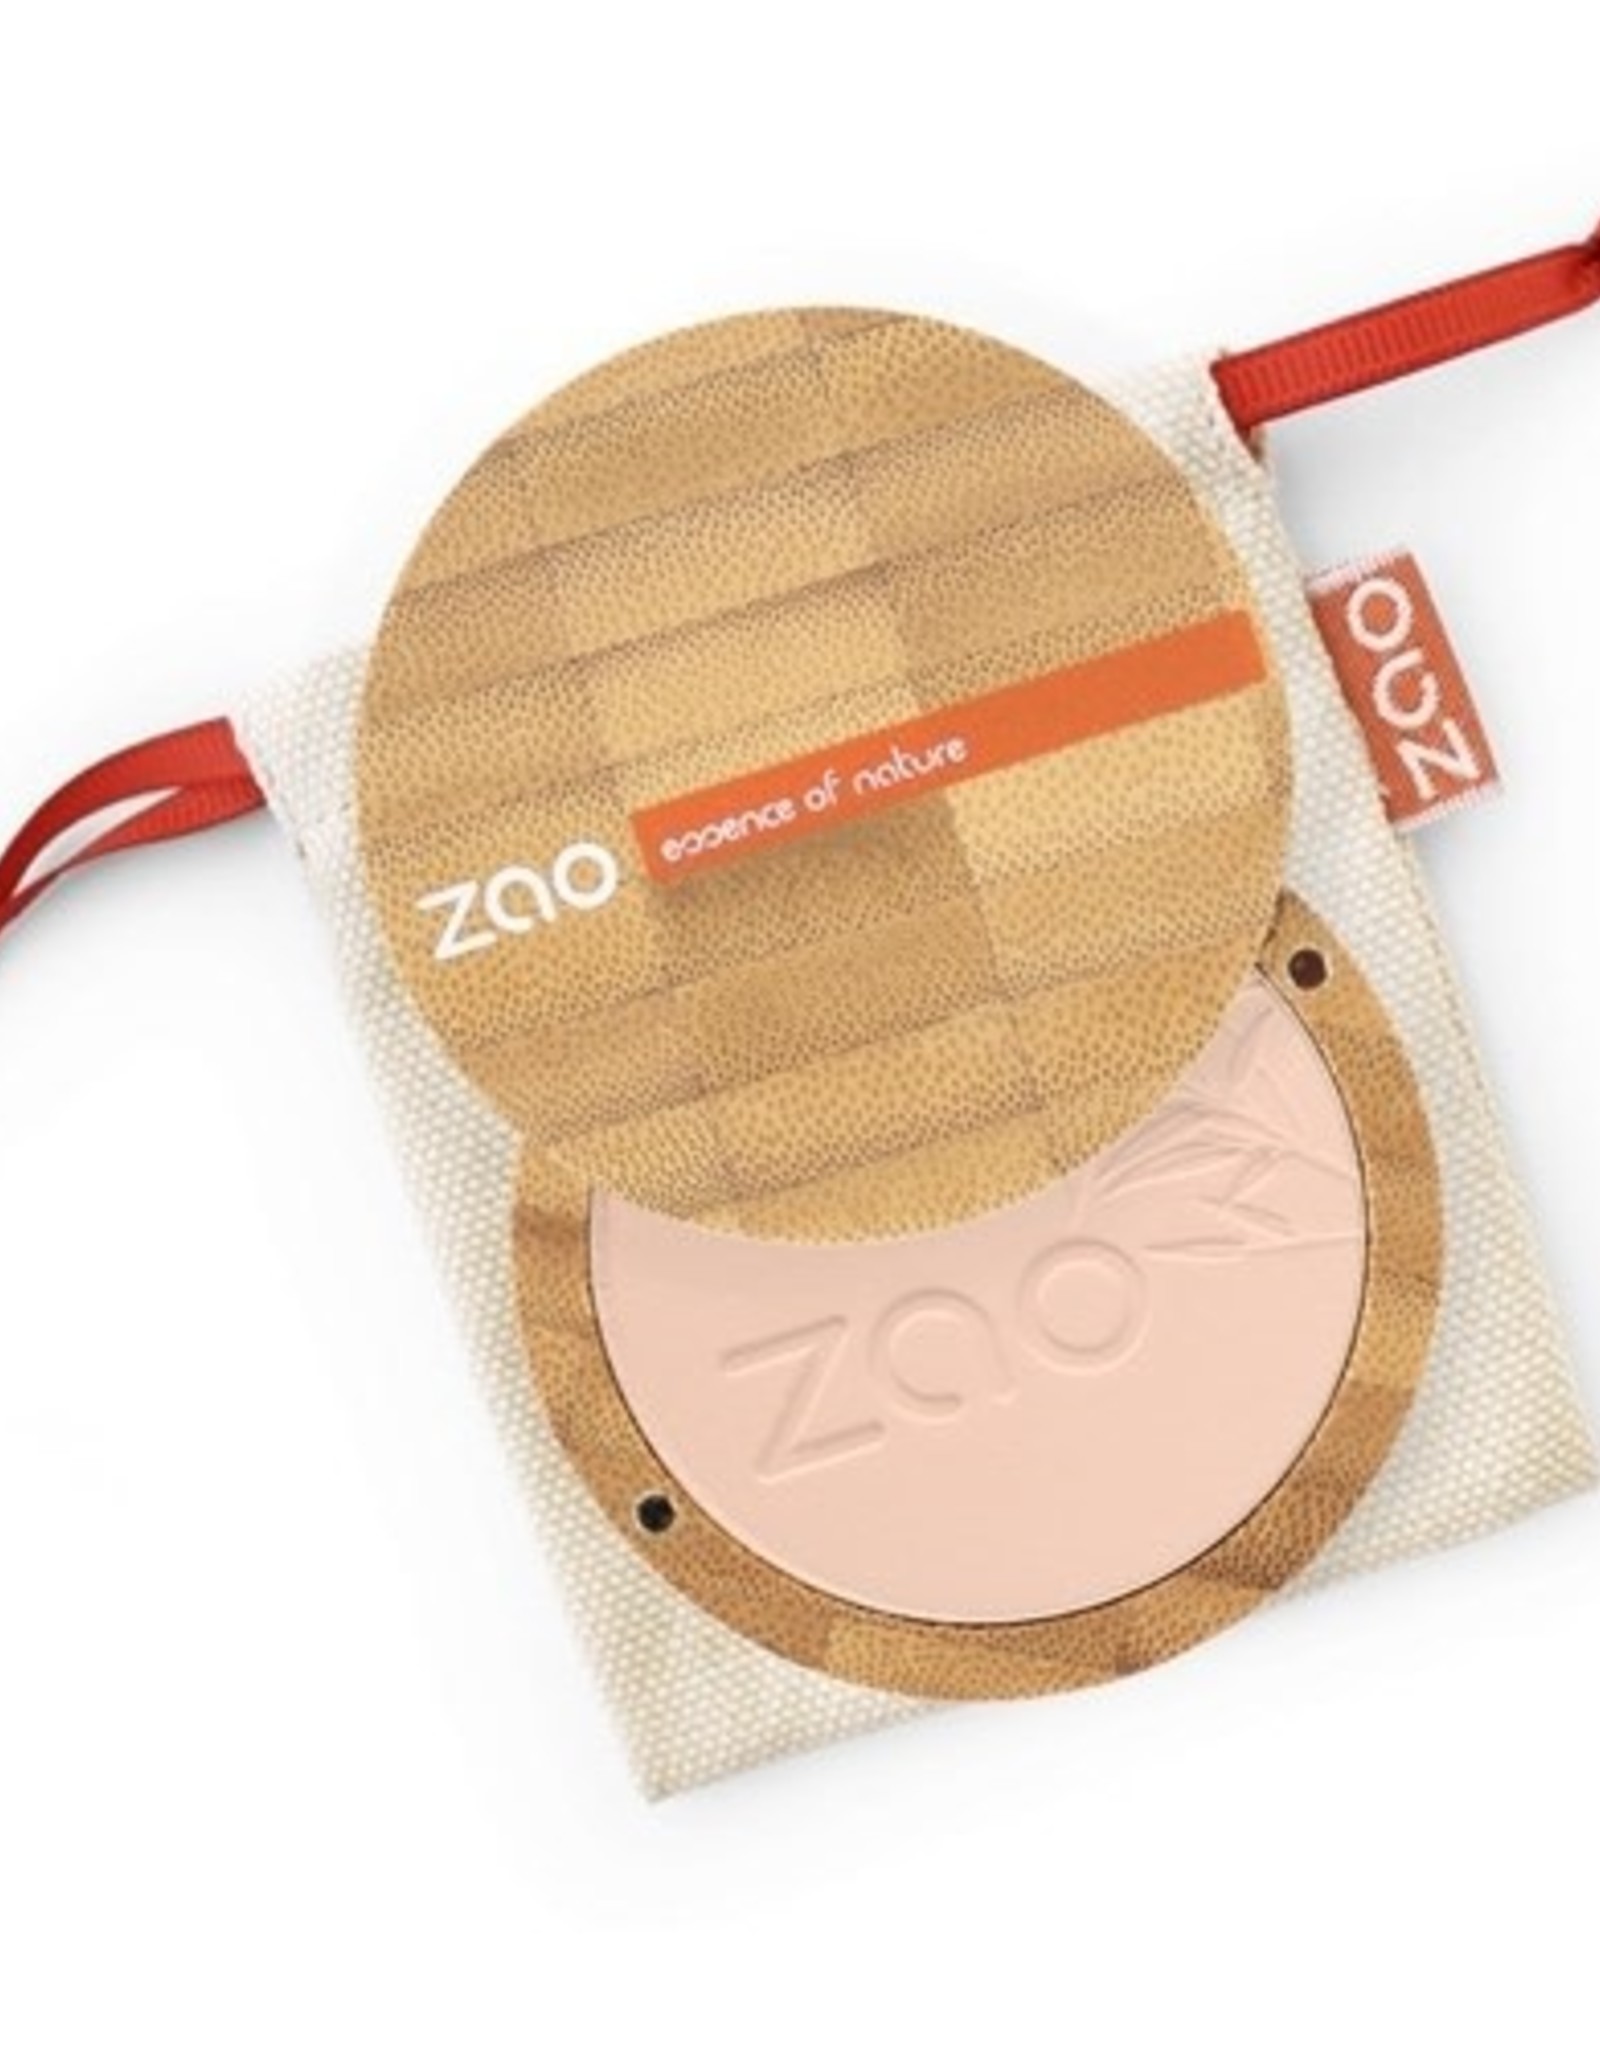 Zao ZAO Bamboe Compact poeder 304 (Cappuccino)